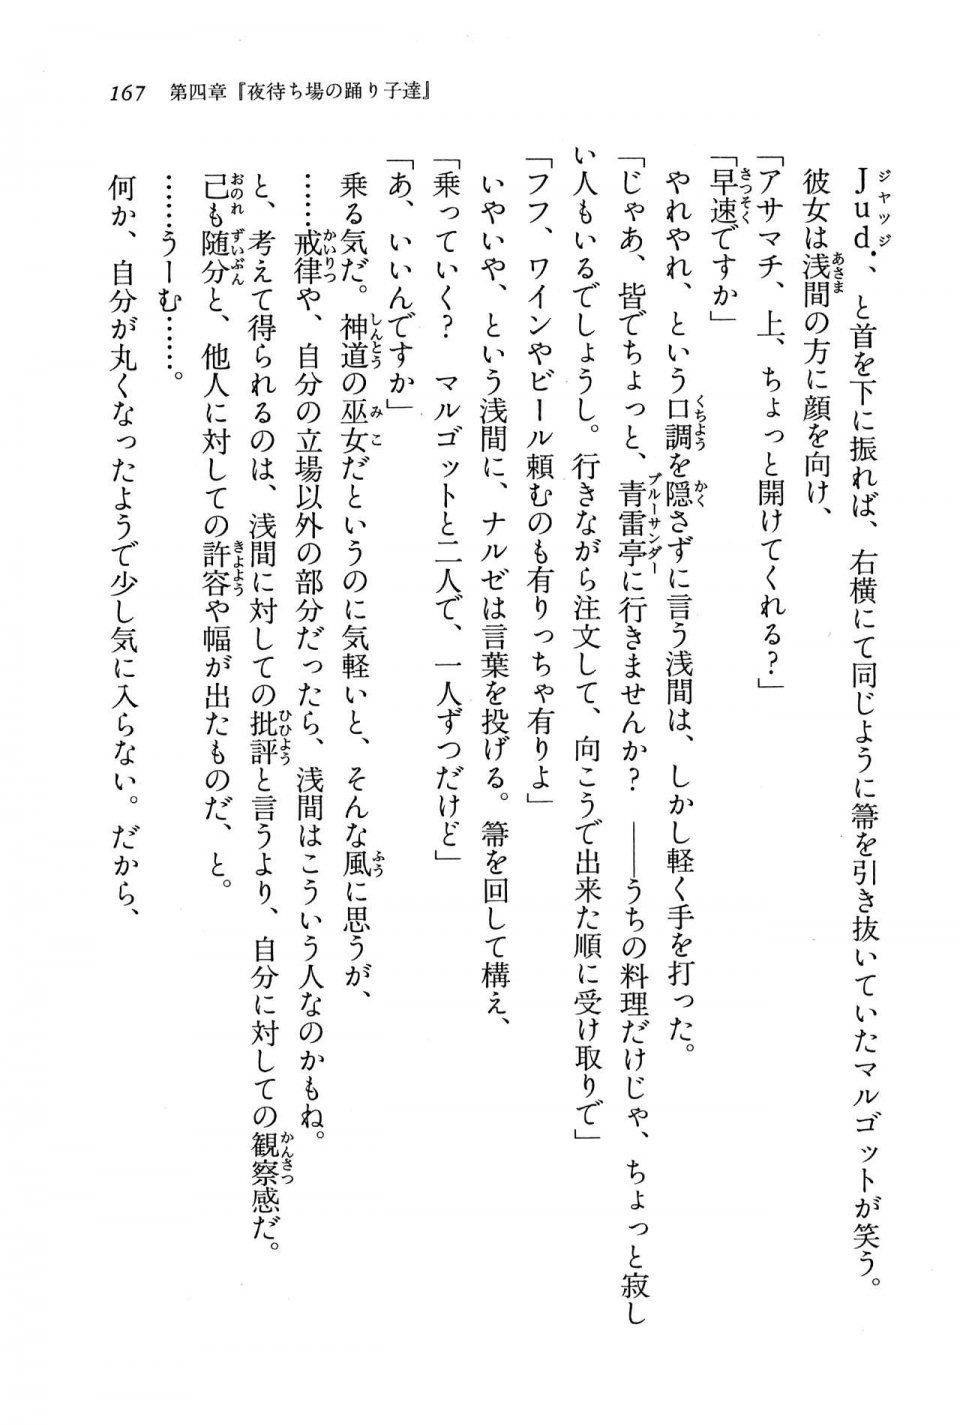 Kyoukai Senjou no Horizon BD Special Mininovel Vol 7(4A) - Photo #171